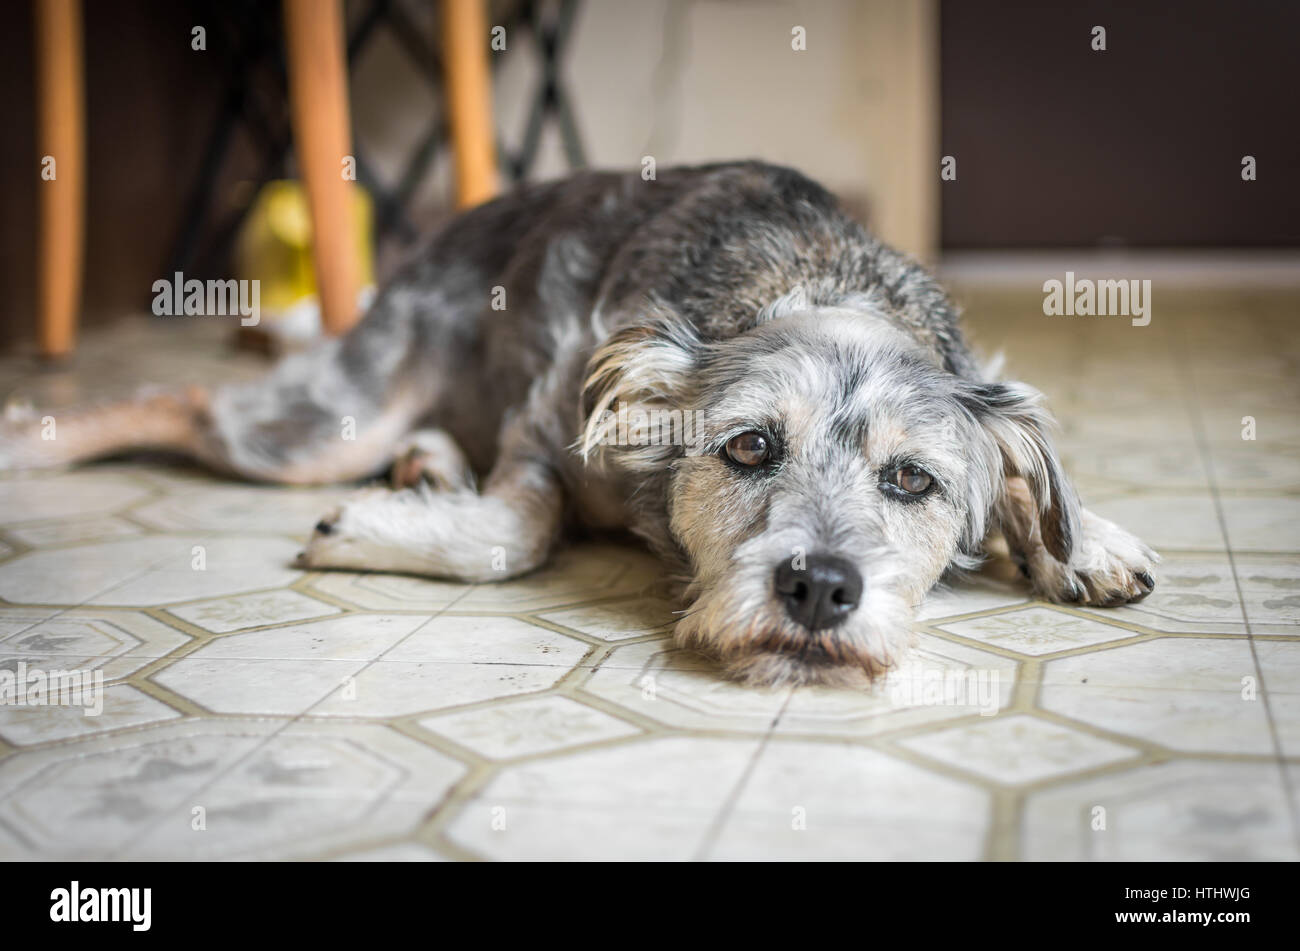 A sad-looking dog lying on the kitchen floor. Stock Photo